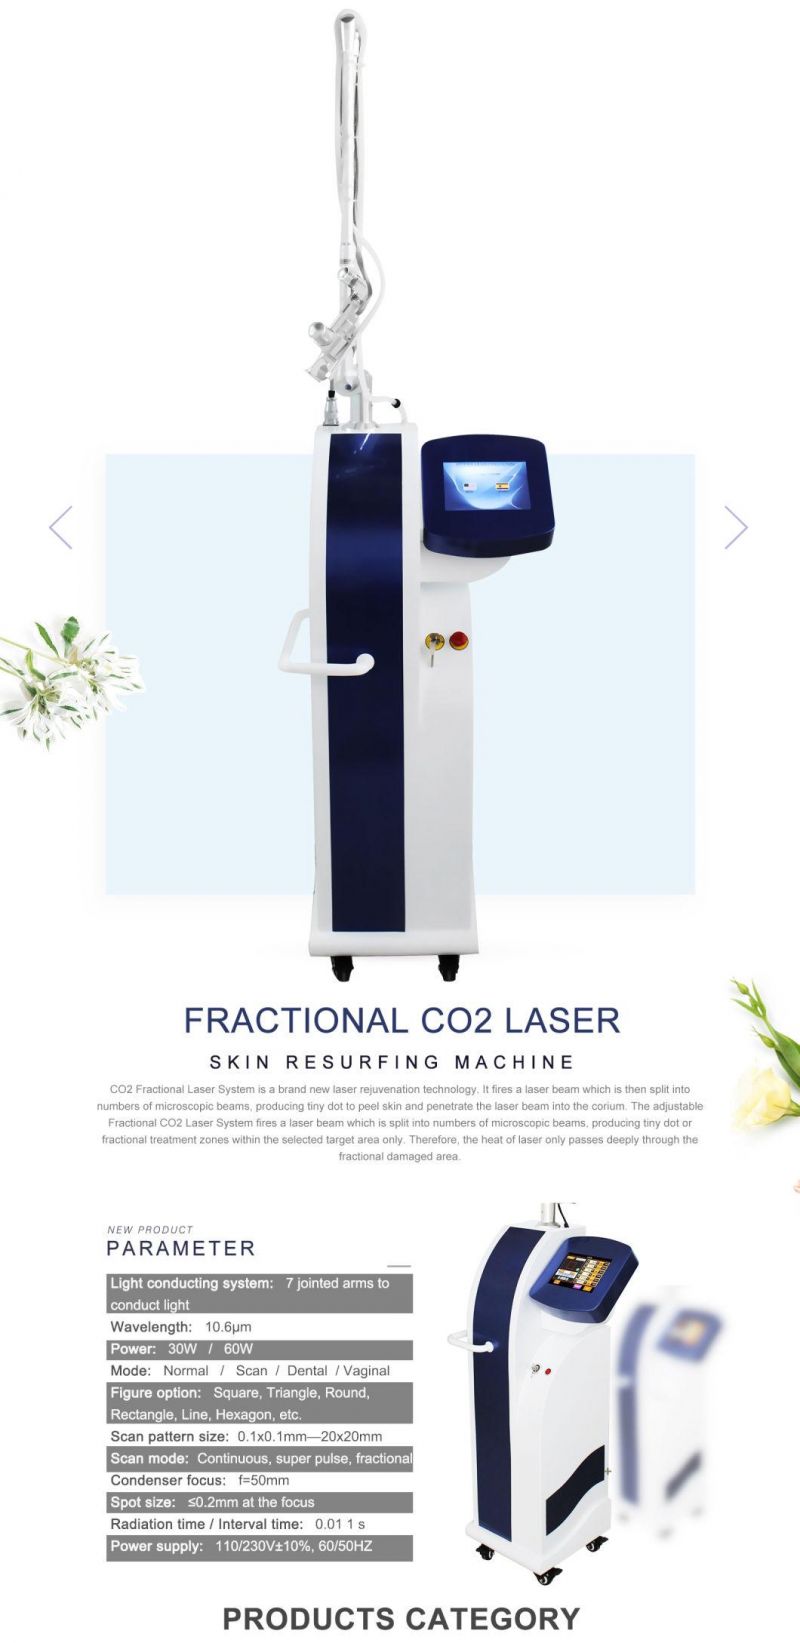 10600nm Skin Resurfacing Fractional CO2 Laser for Rejuvenation